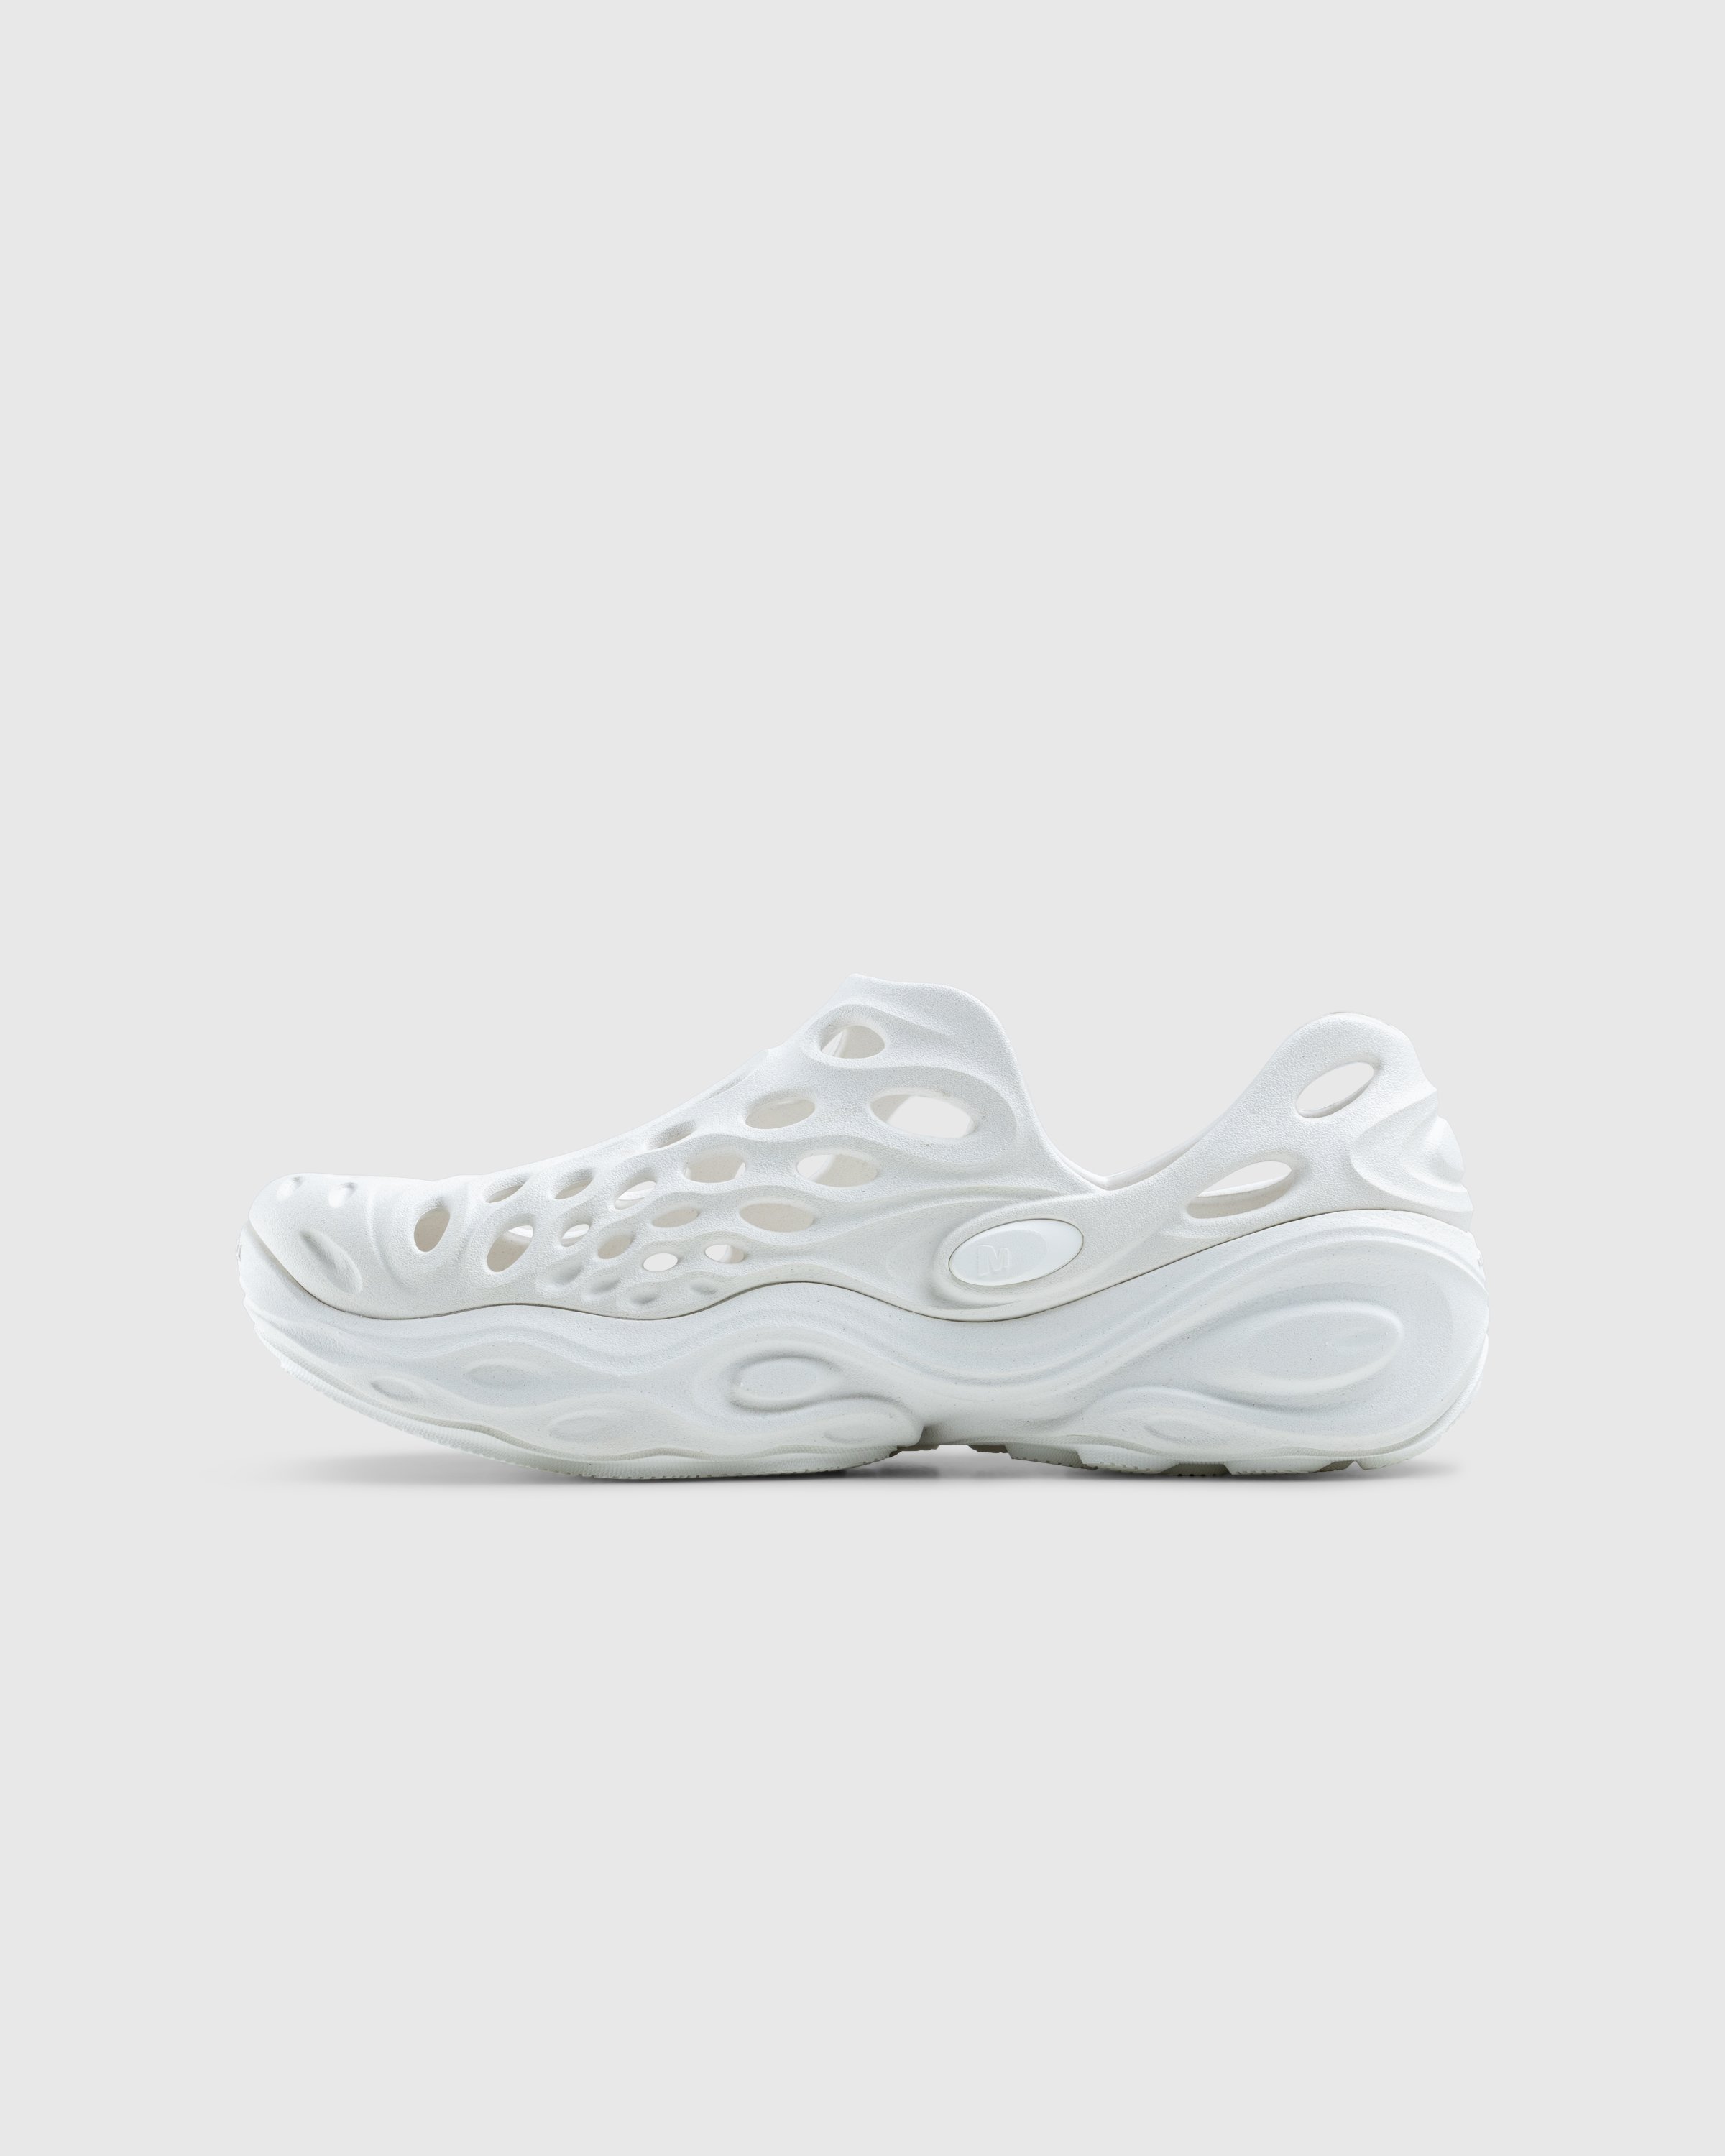 Merrell - HYDRO NEXT GEN MOC SE/TRIPLE WHITE - Footwear - White - Image 2